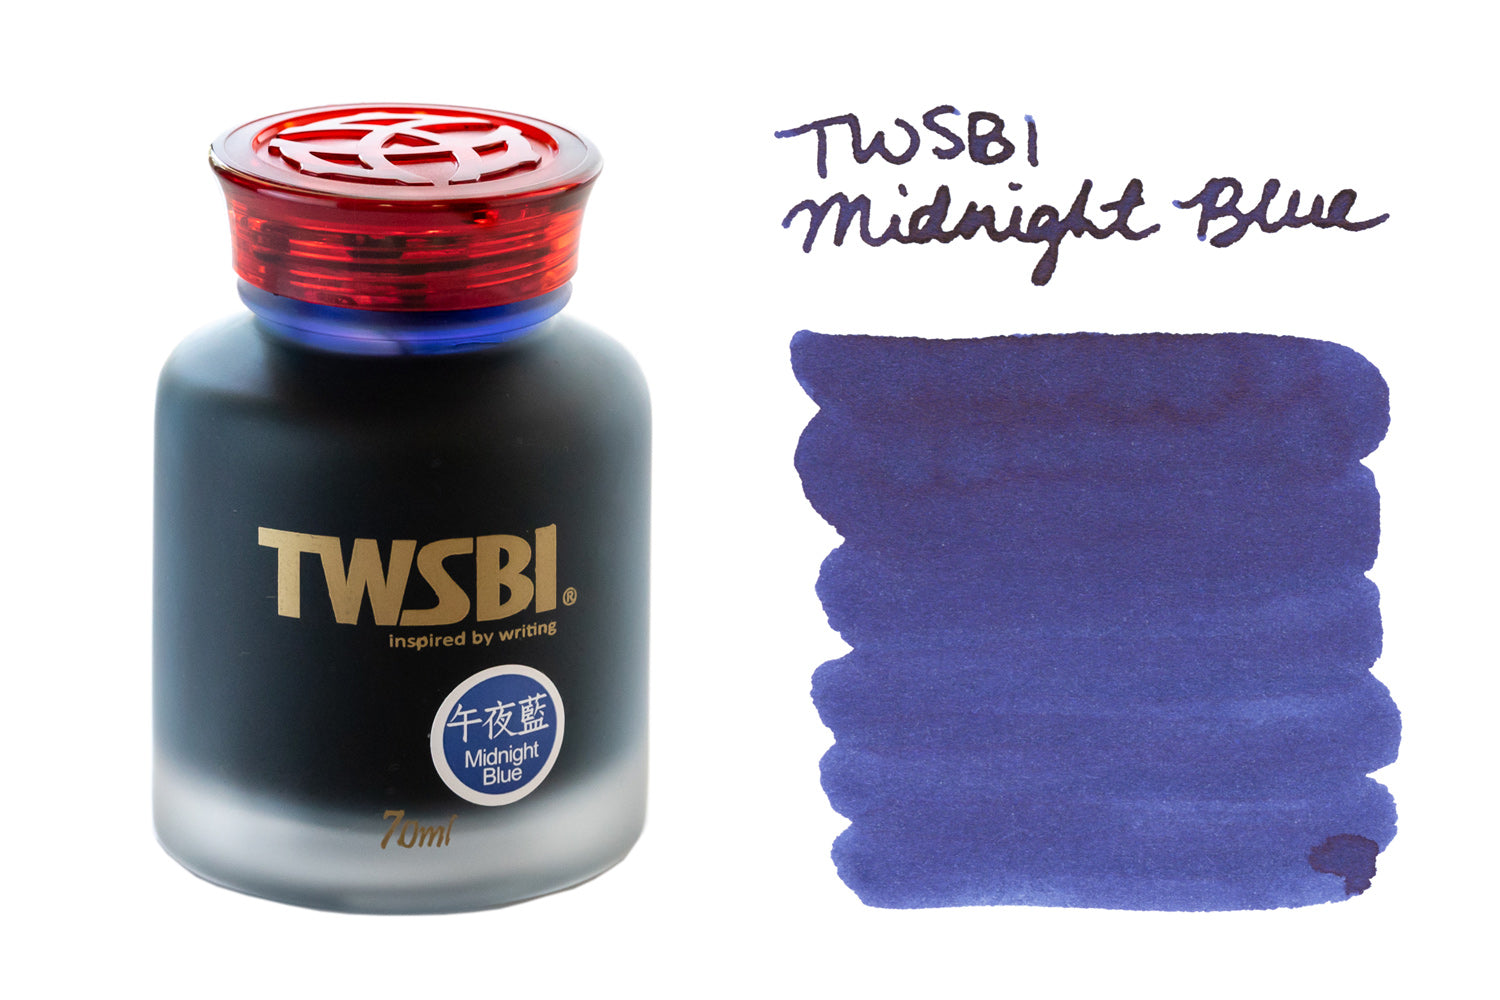 Twsbi Midnight Blue 70ml Bottled Ink The Goulet Pen Company